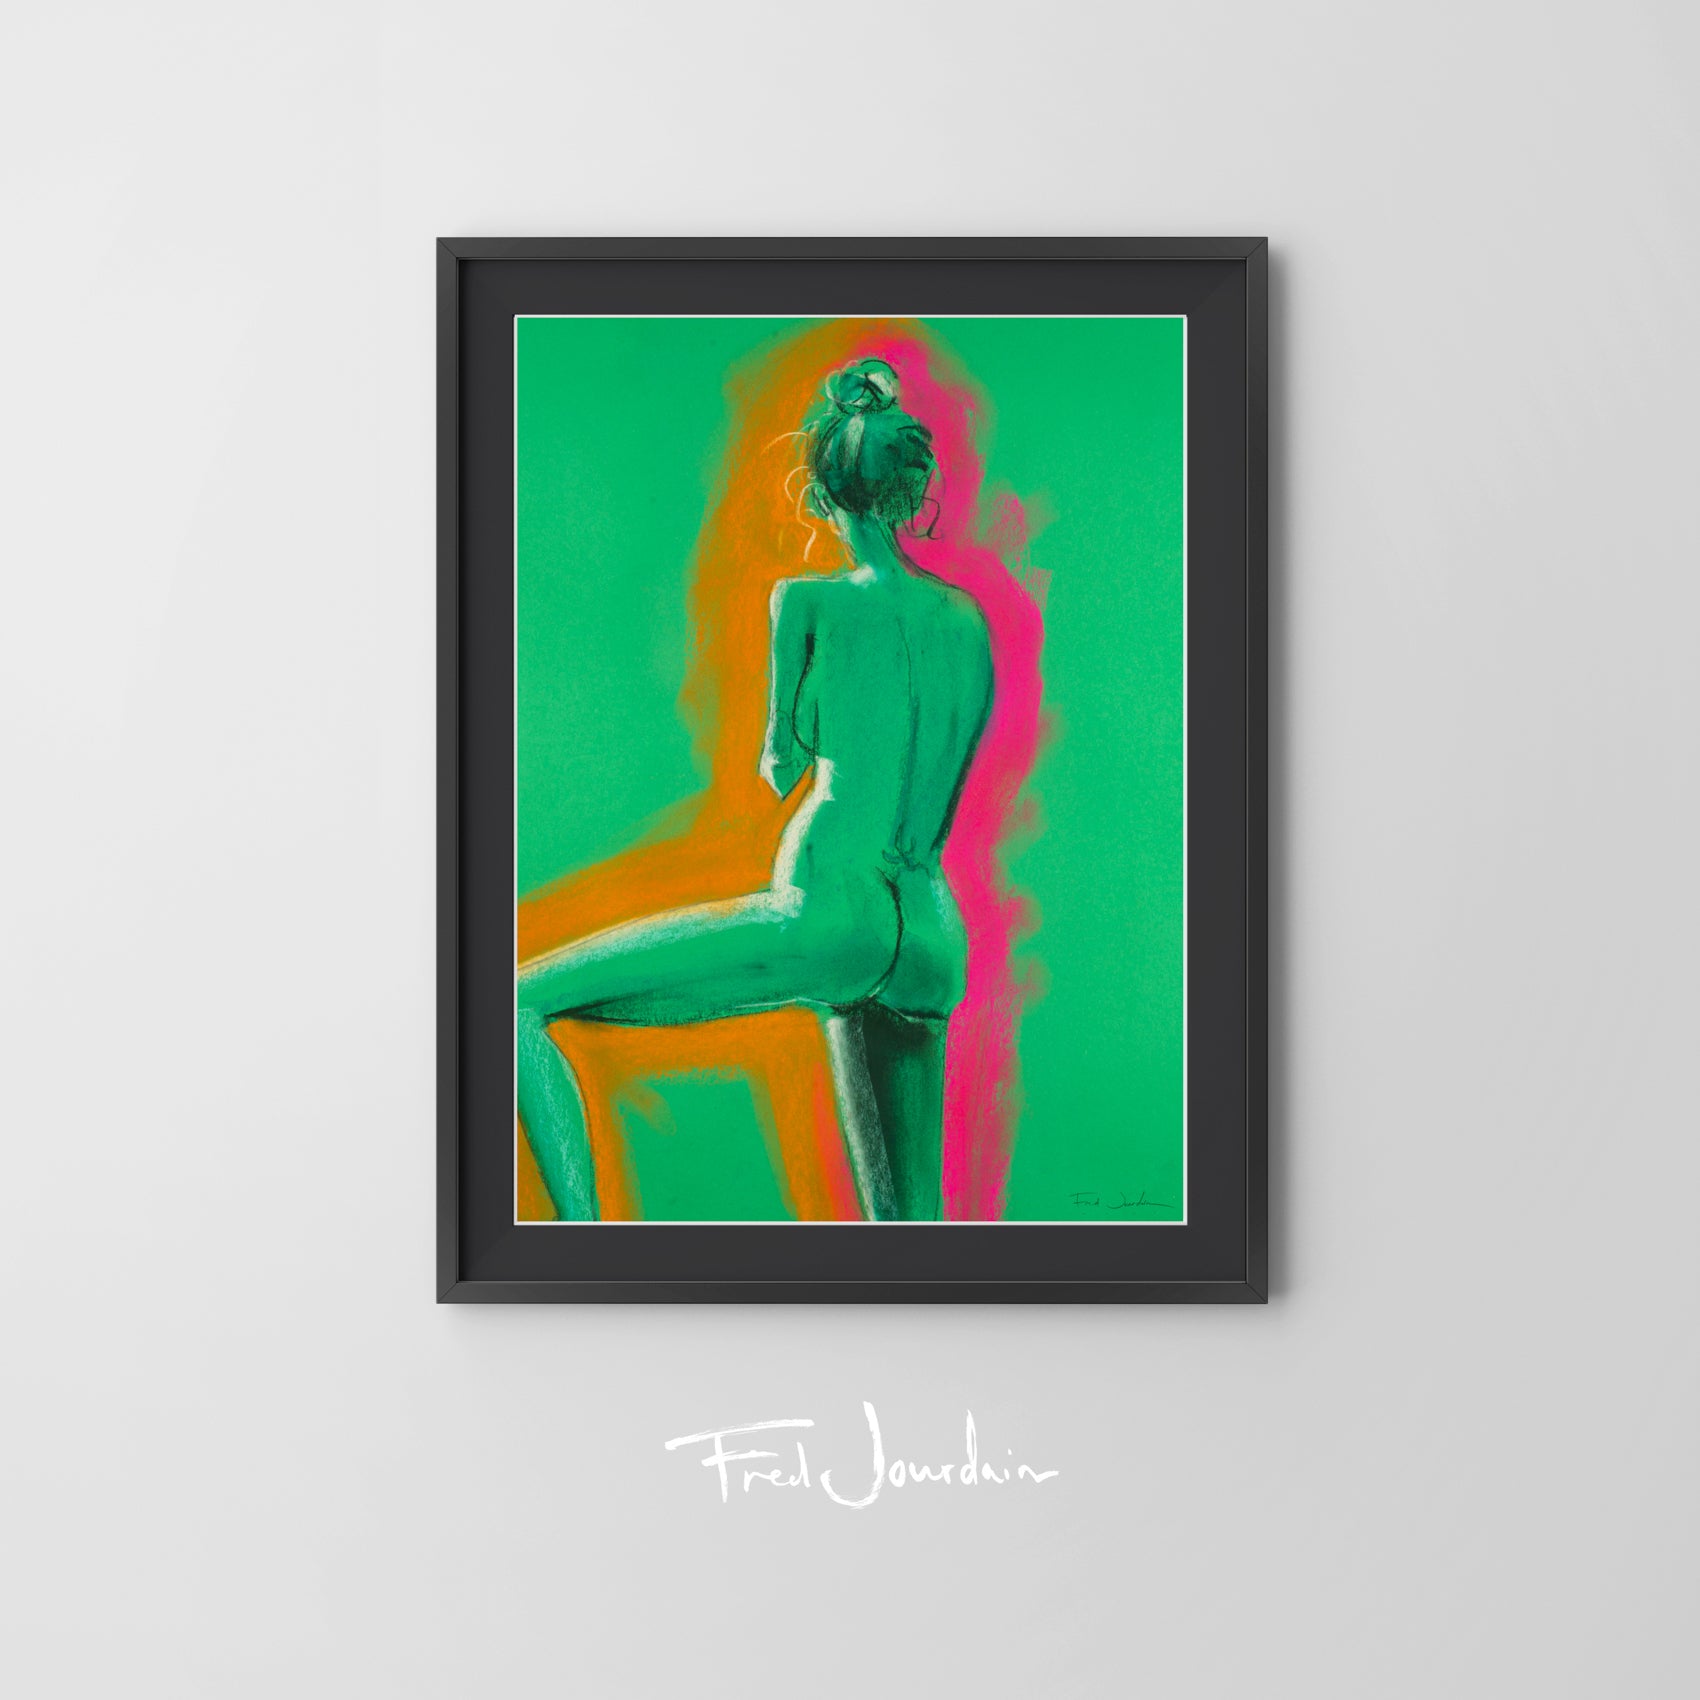 Green Lady - Pastel - 18" x 24"